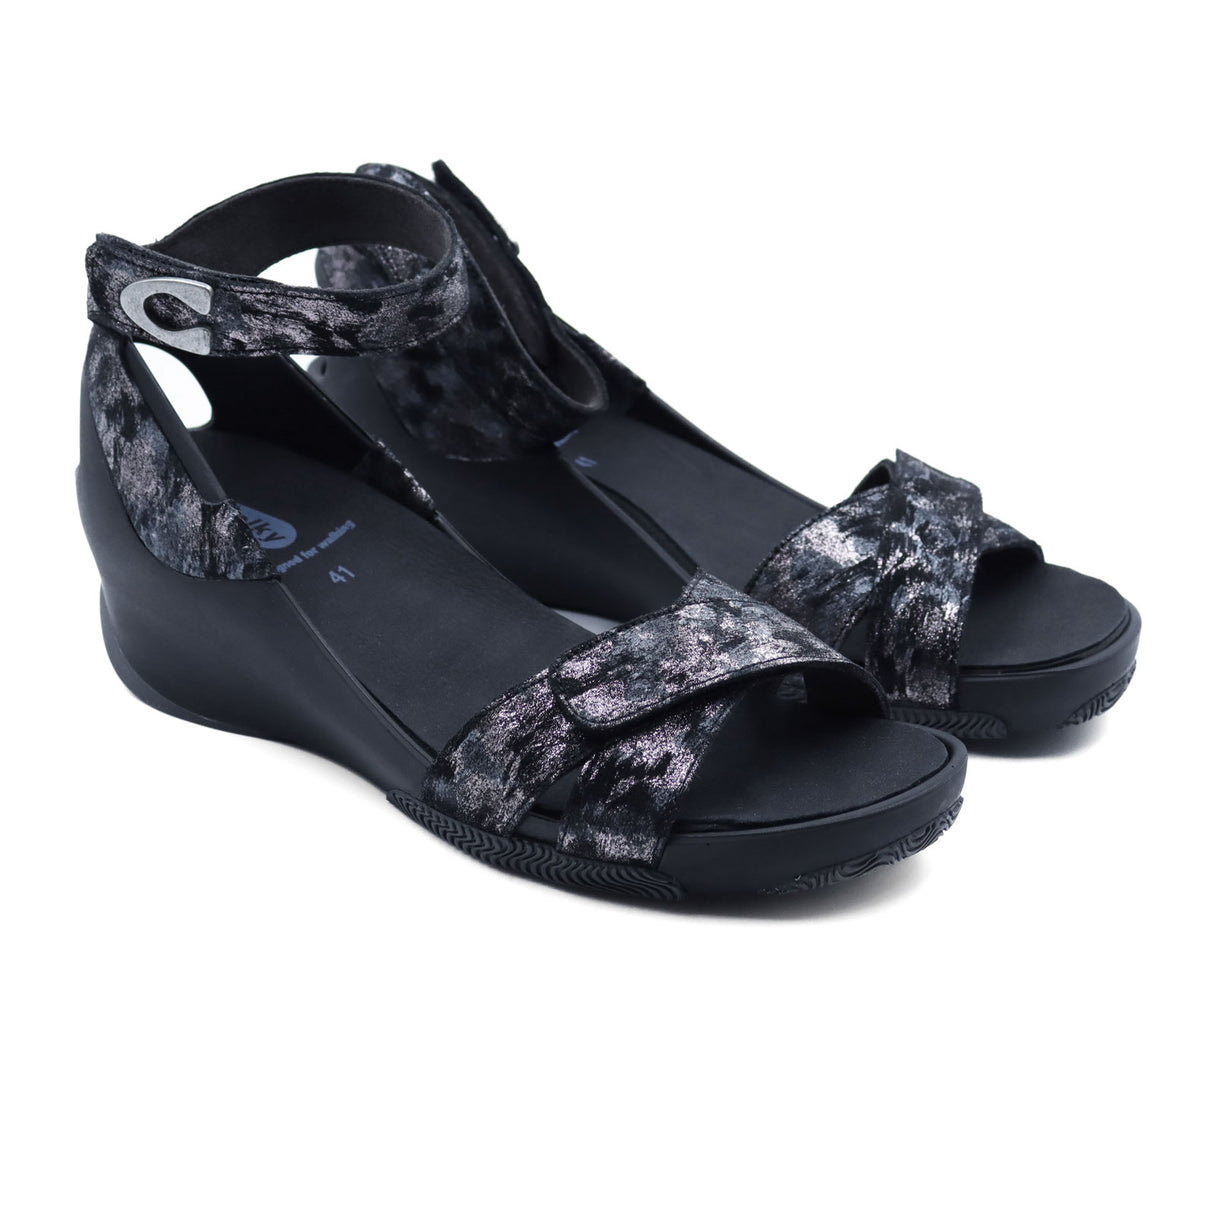 Wolky Era Wedge Sandal (Women) - Black Storm Suede Sandals - Backstrap - The Heel Shoe Fitters